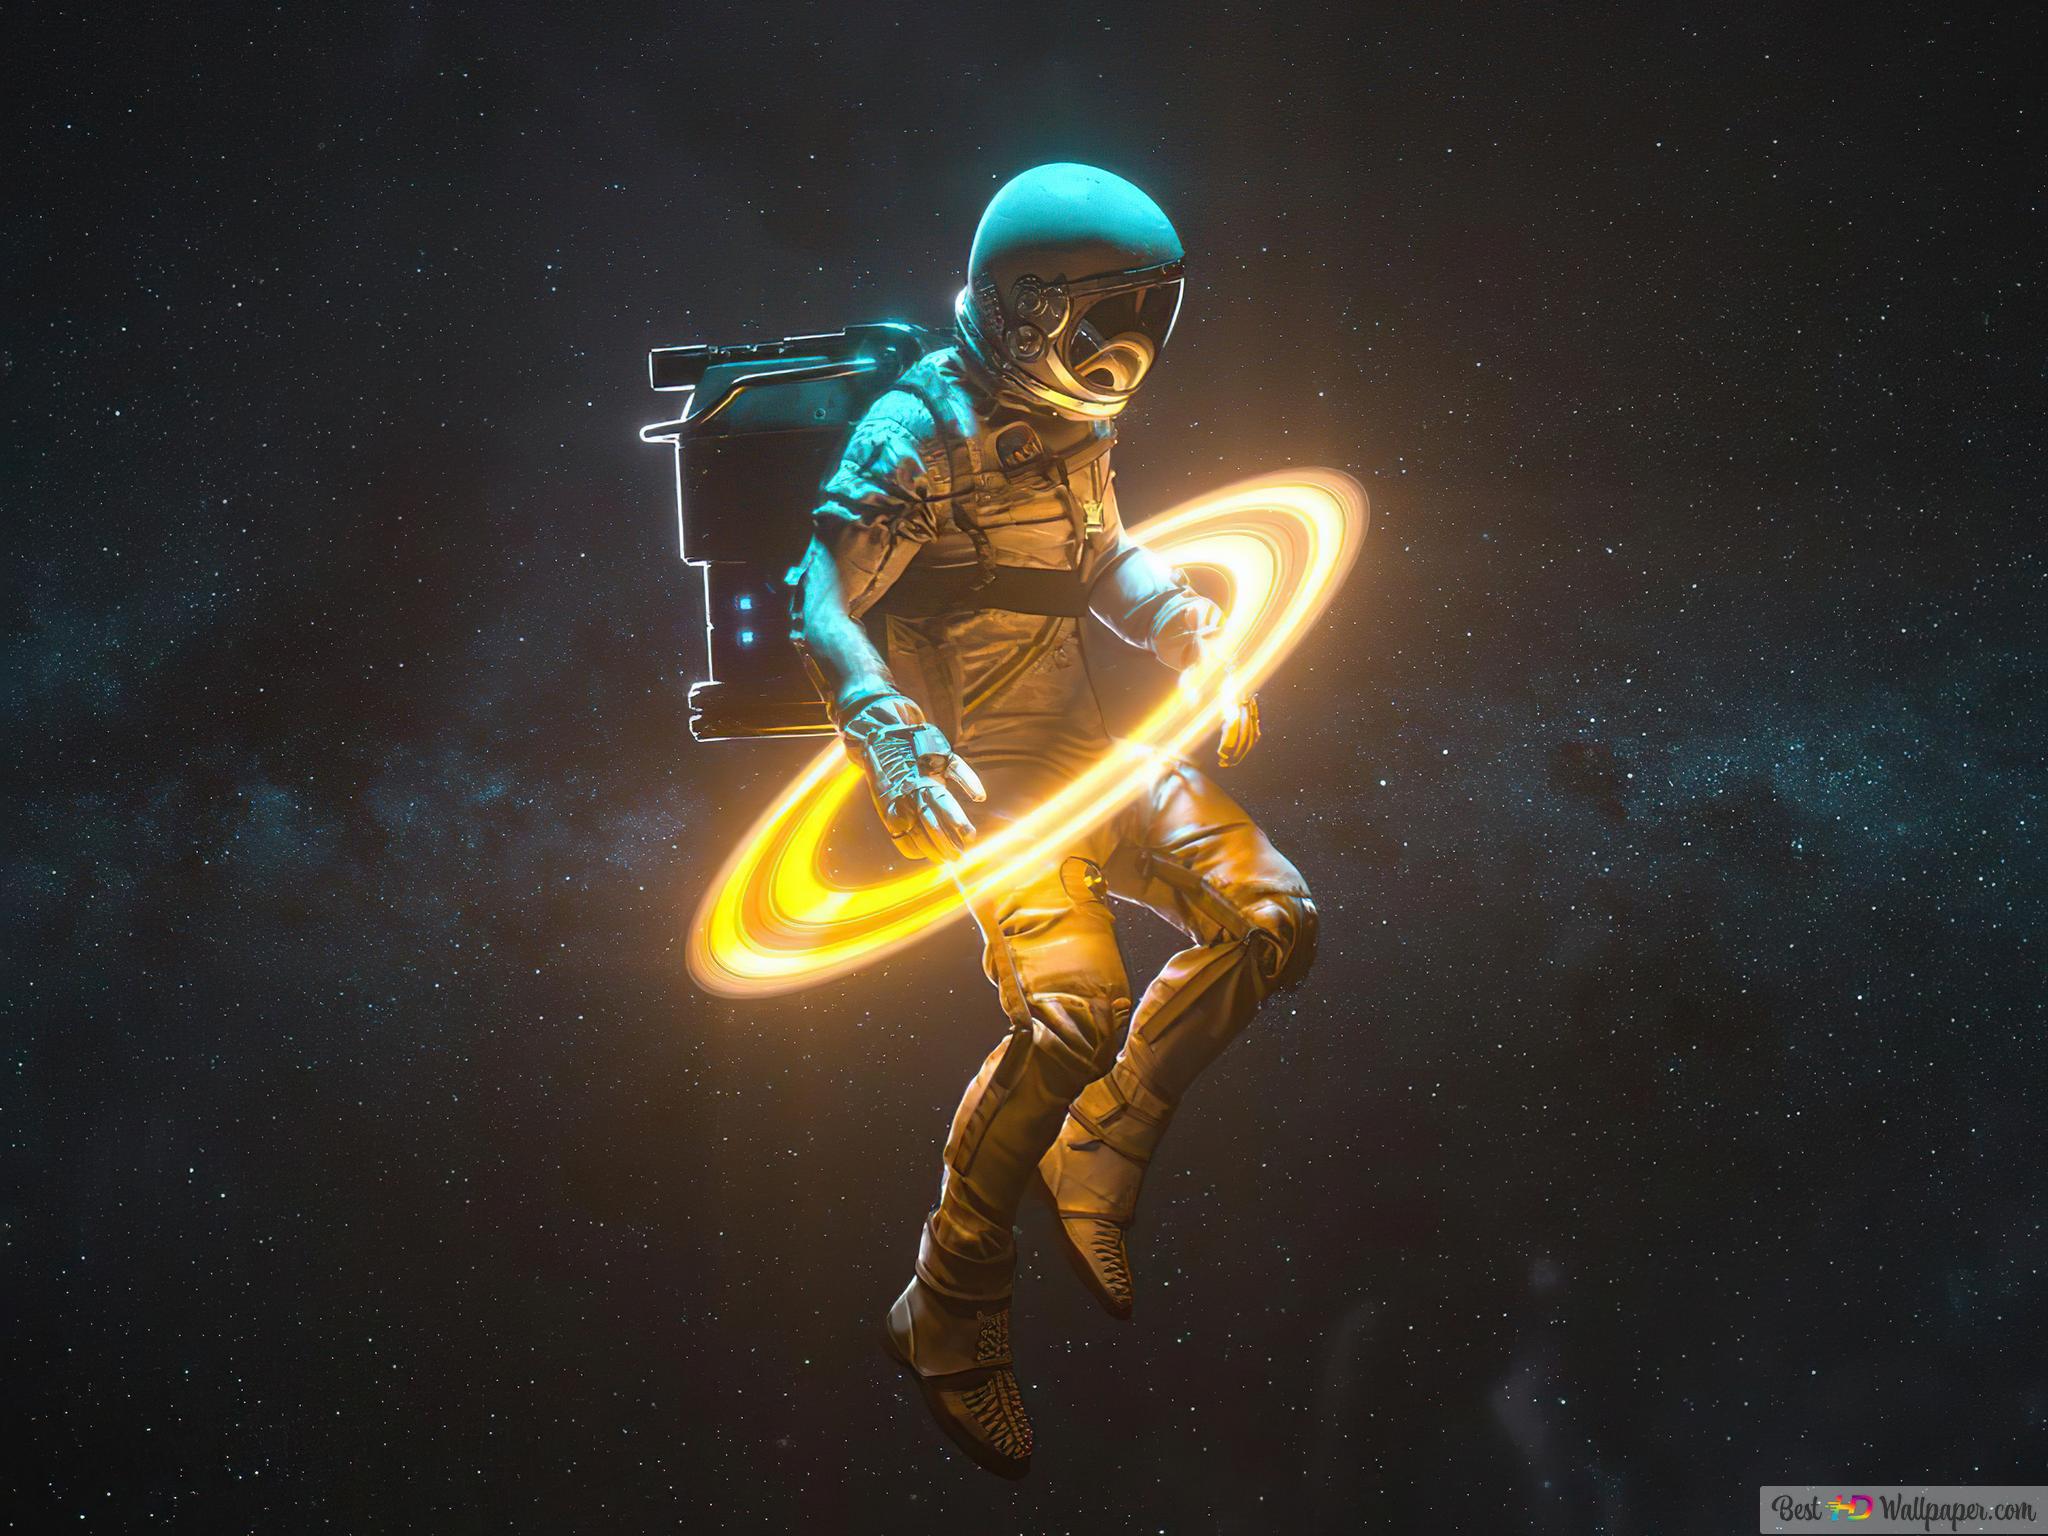 Astronaut in yellow saturn ring 4K wallpaper download